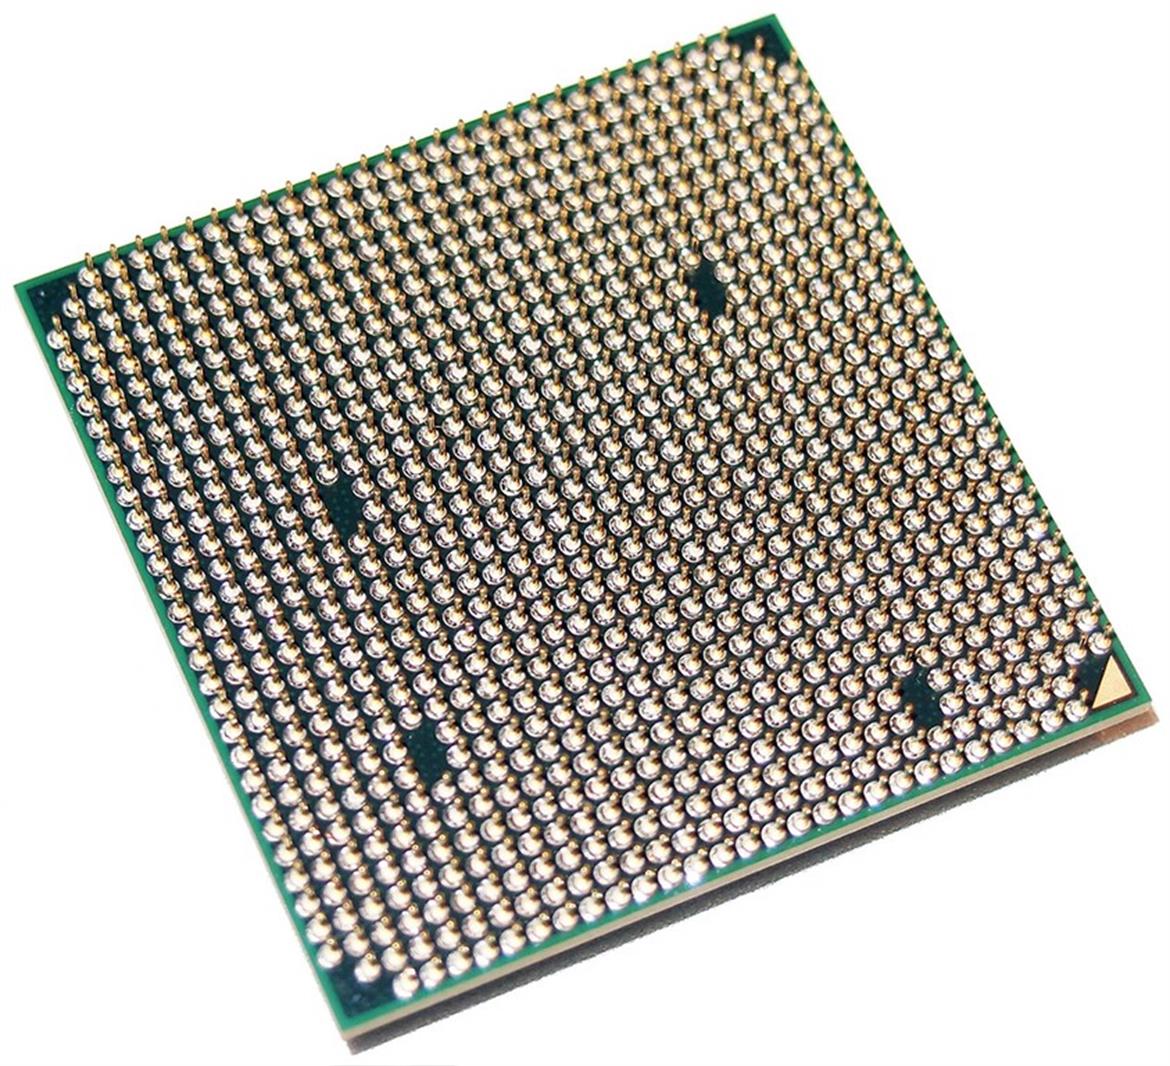 AMD FX-8350 Vishera 8-Core CPU Review